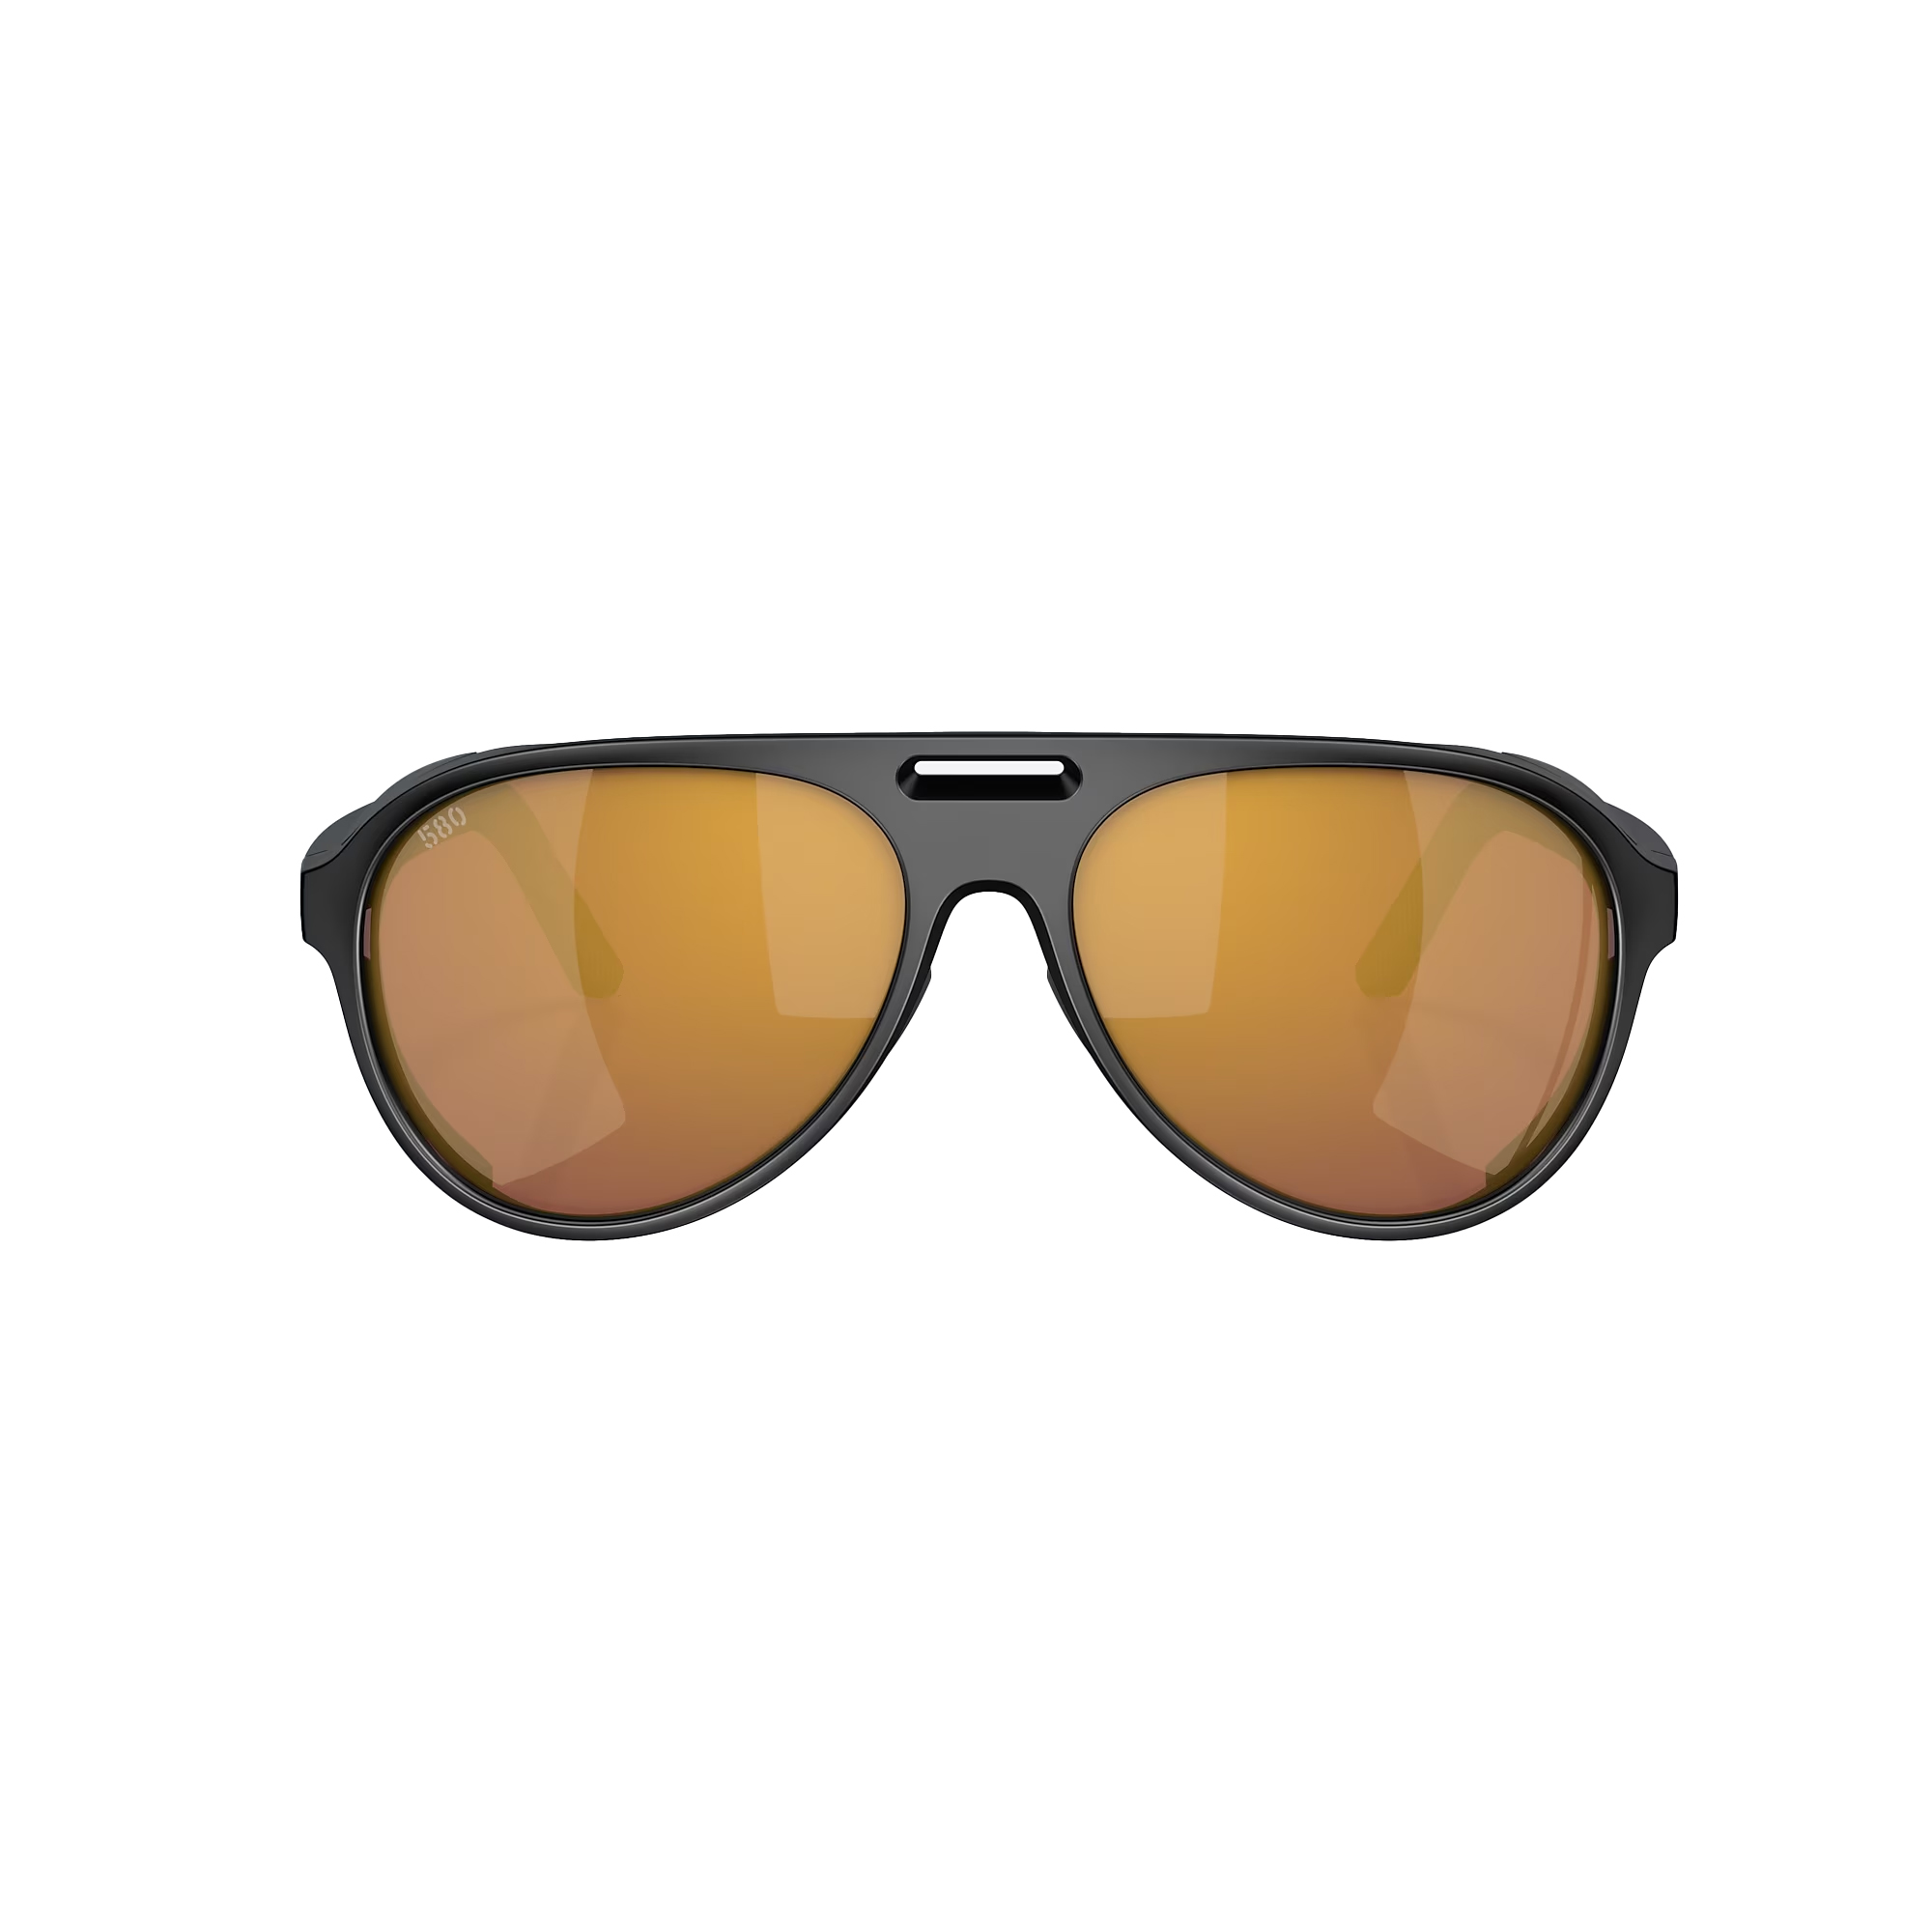 aviator sunglasses and interchangeable side shields